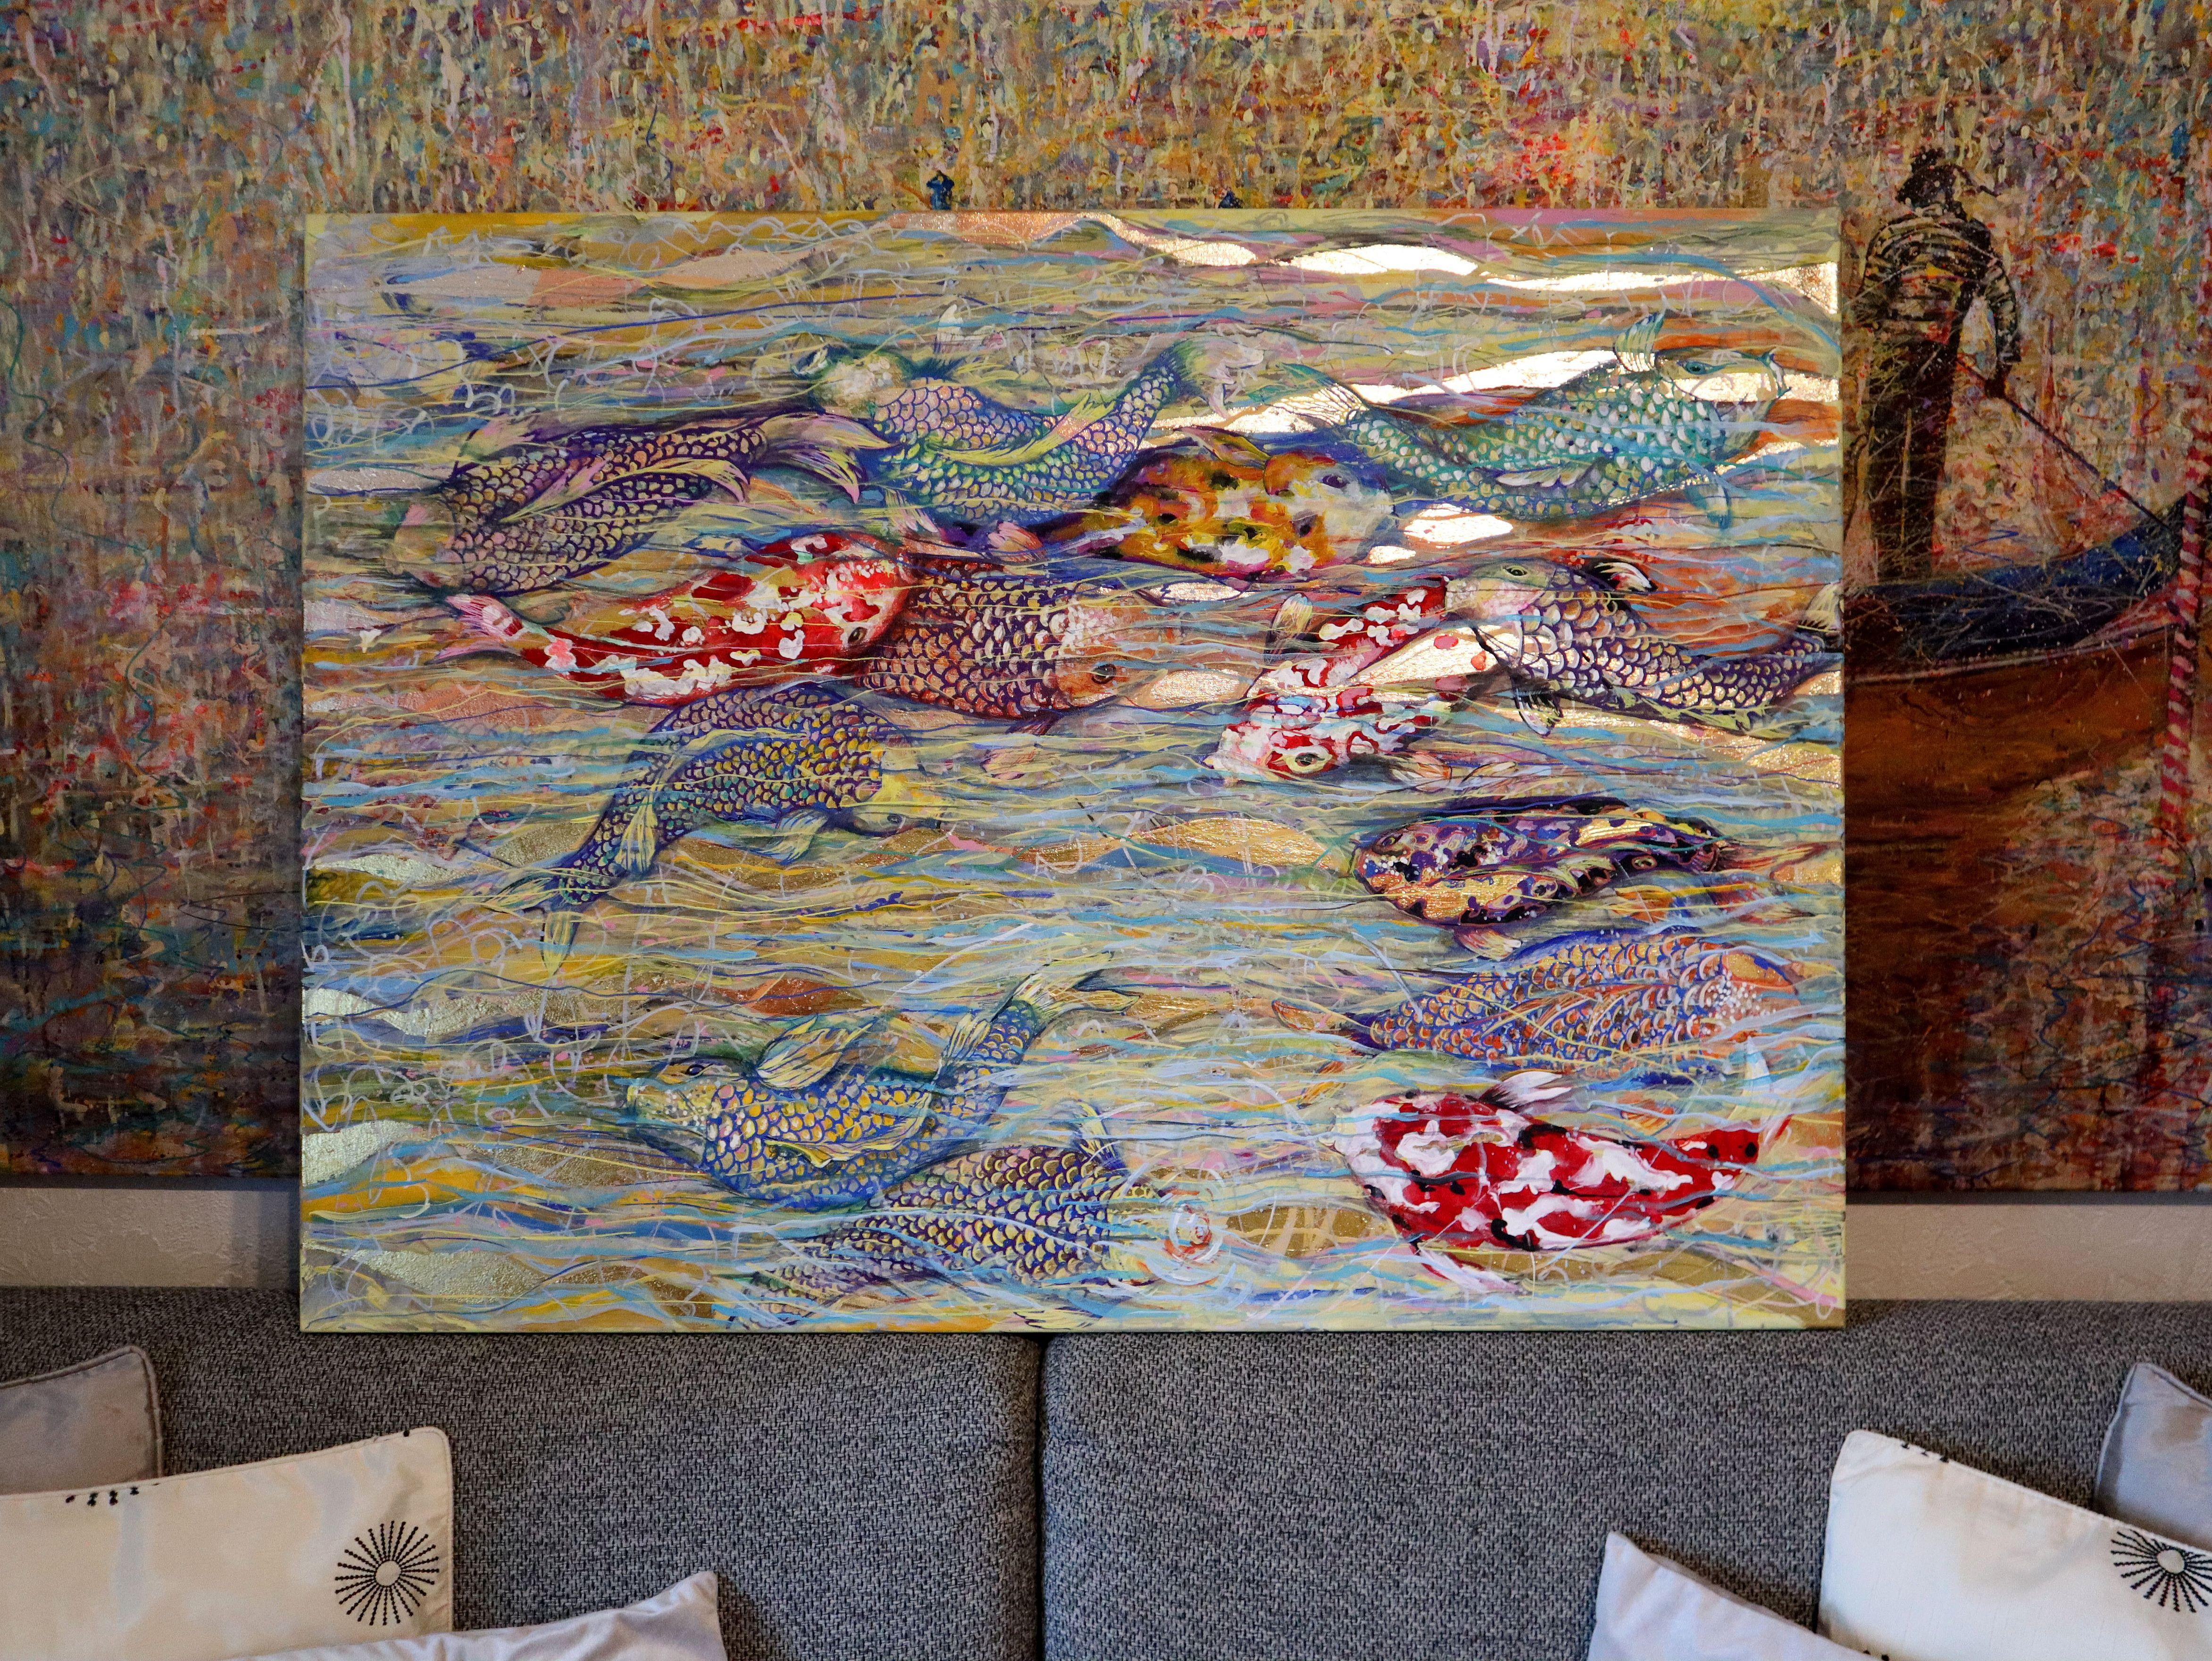 Koi Fish and the Swift Current of the Golden River - Painting by RAKHMET REDZHEPOV (RAMZI)